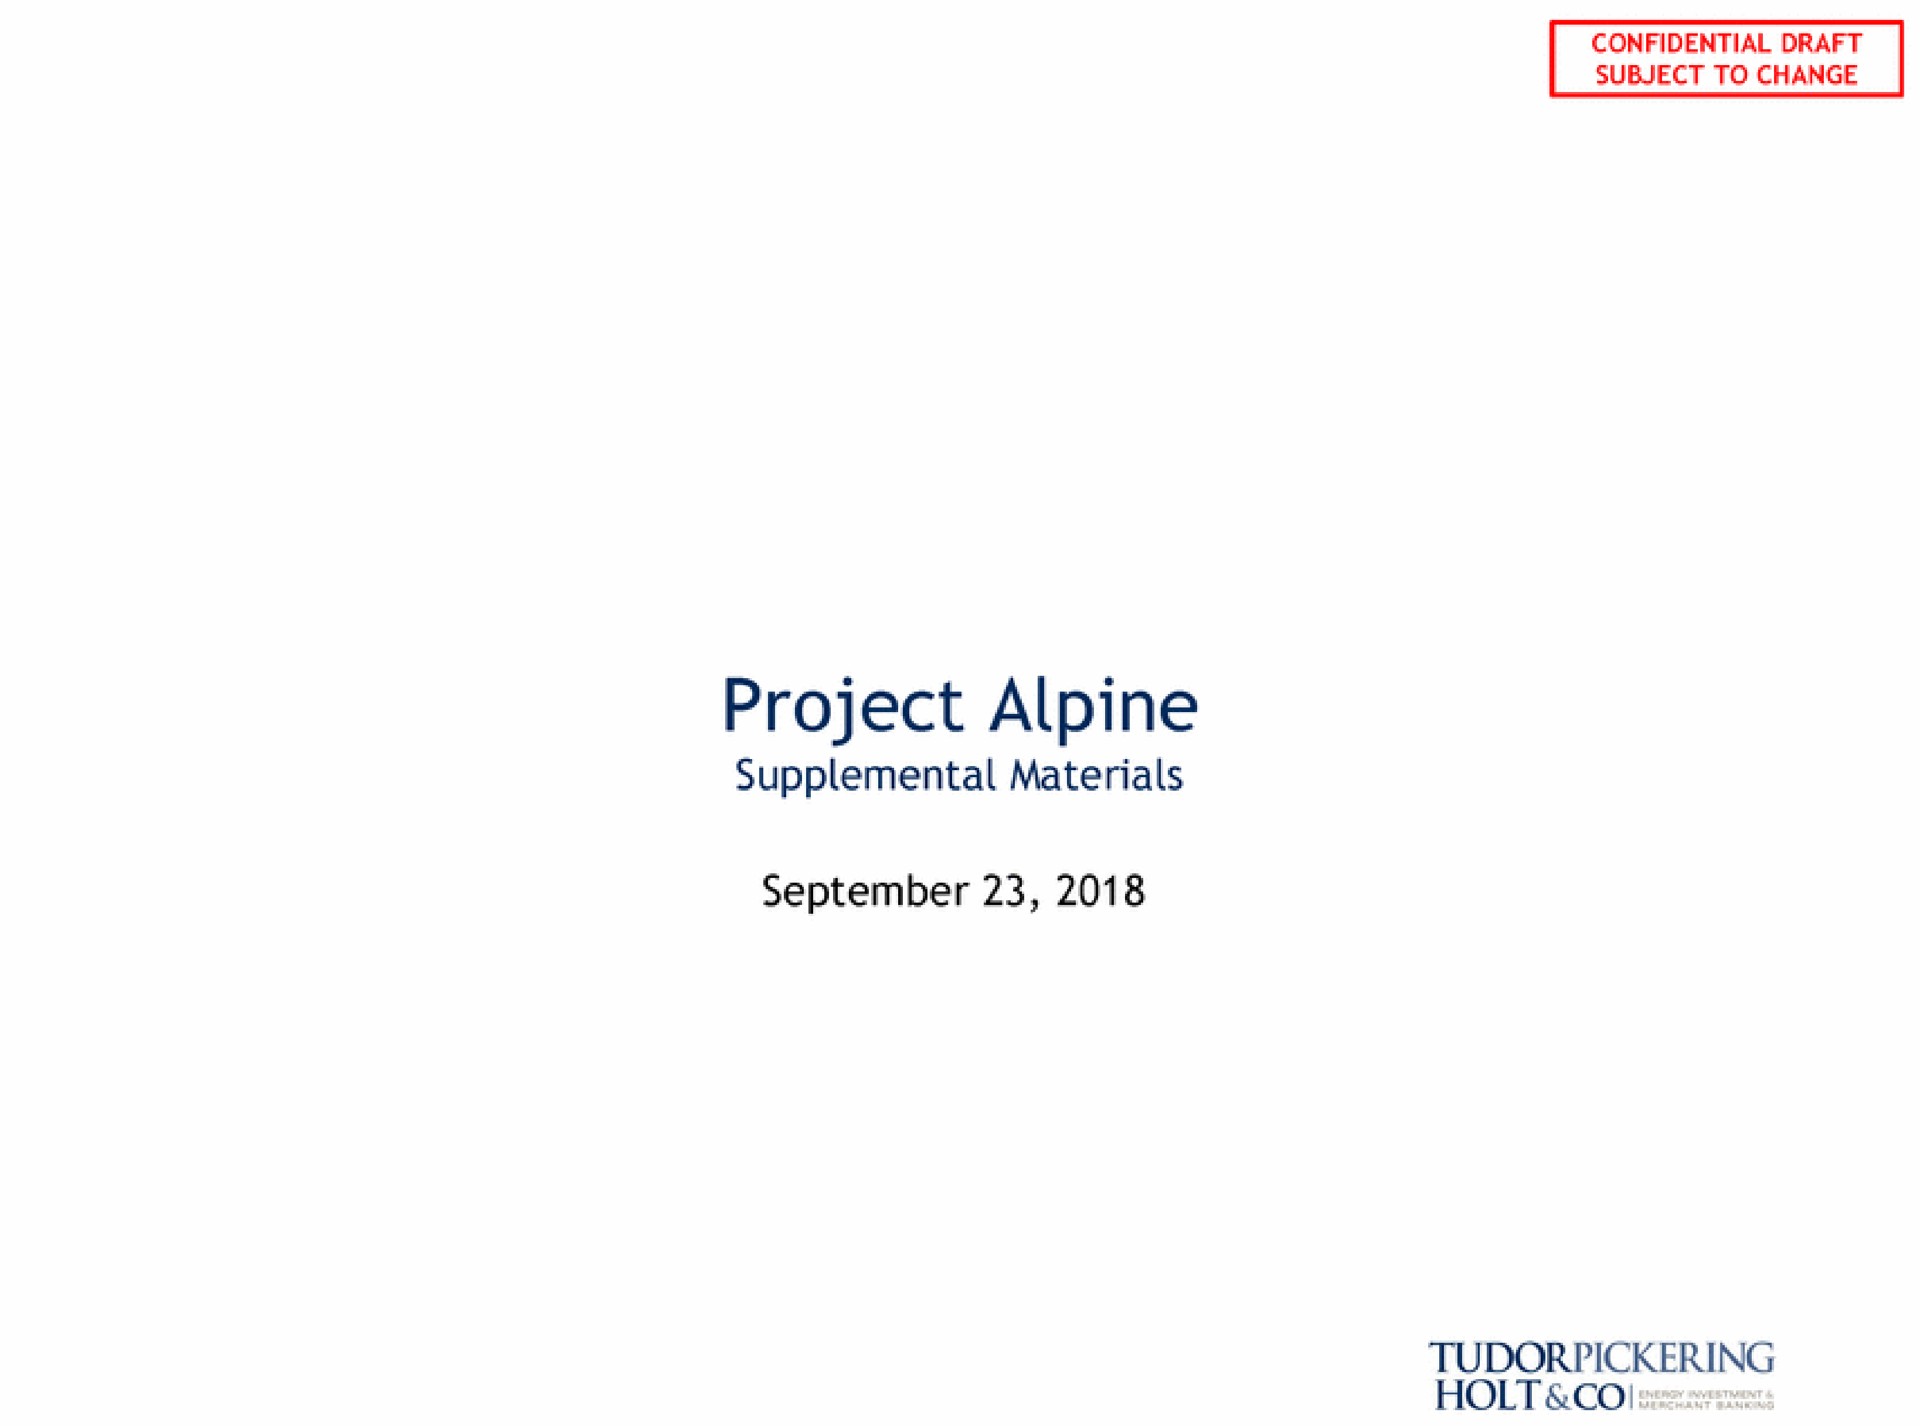 project alpine supplemental materials holt coo | Tudor, Pickering, Holt & Co